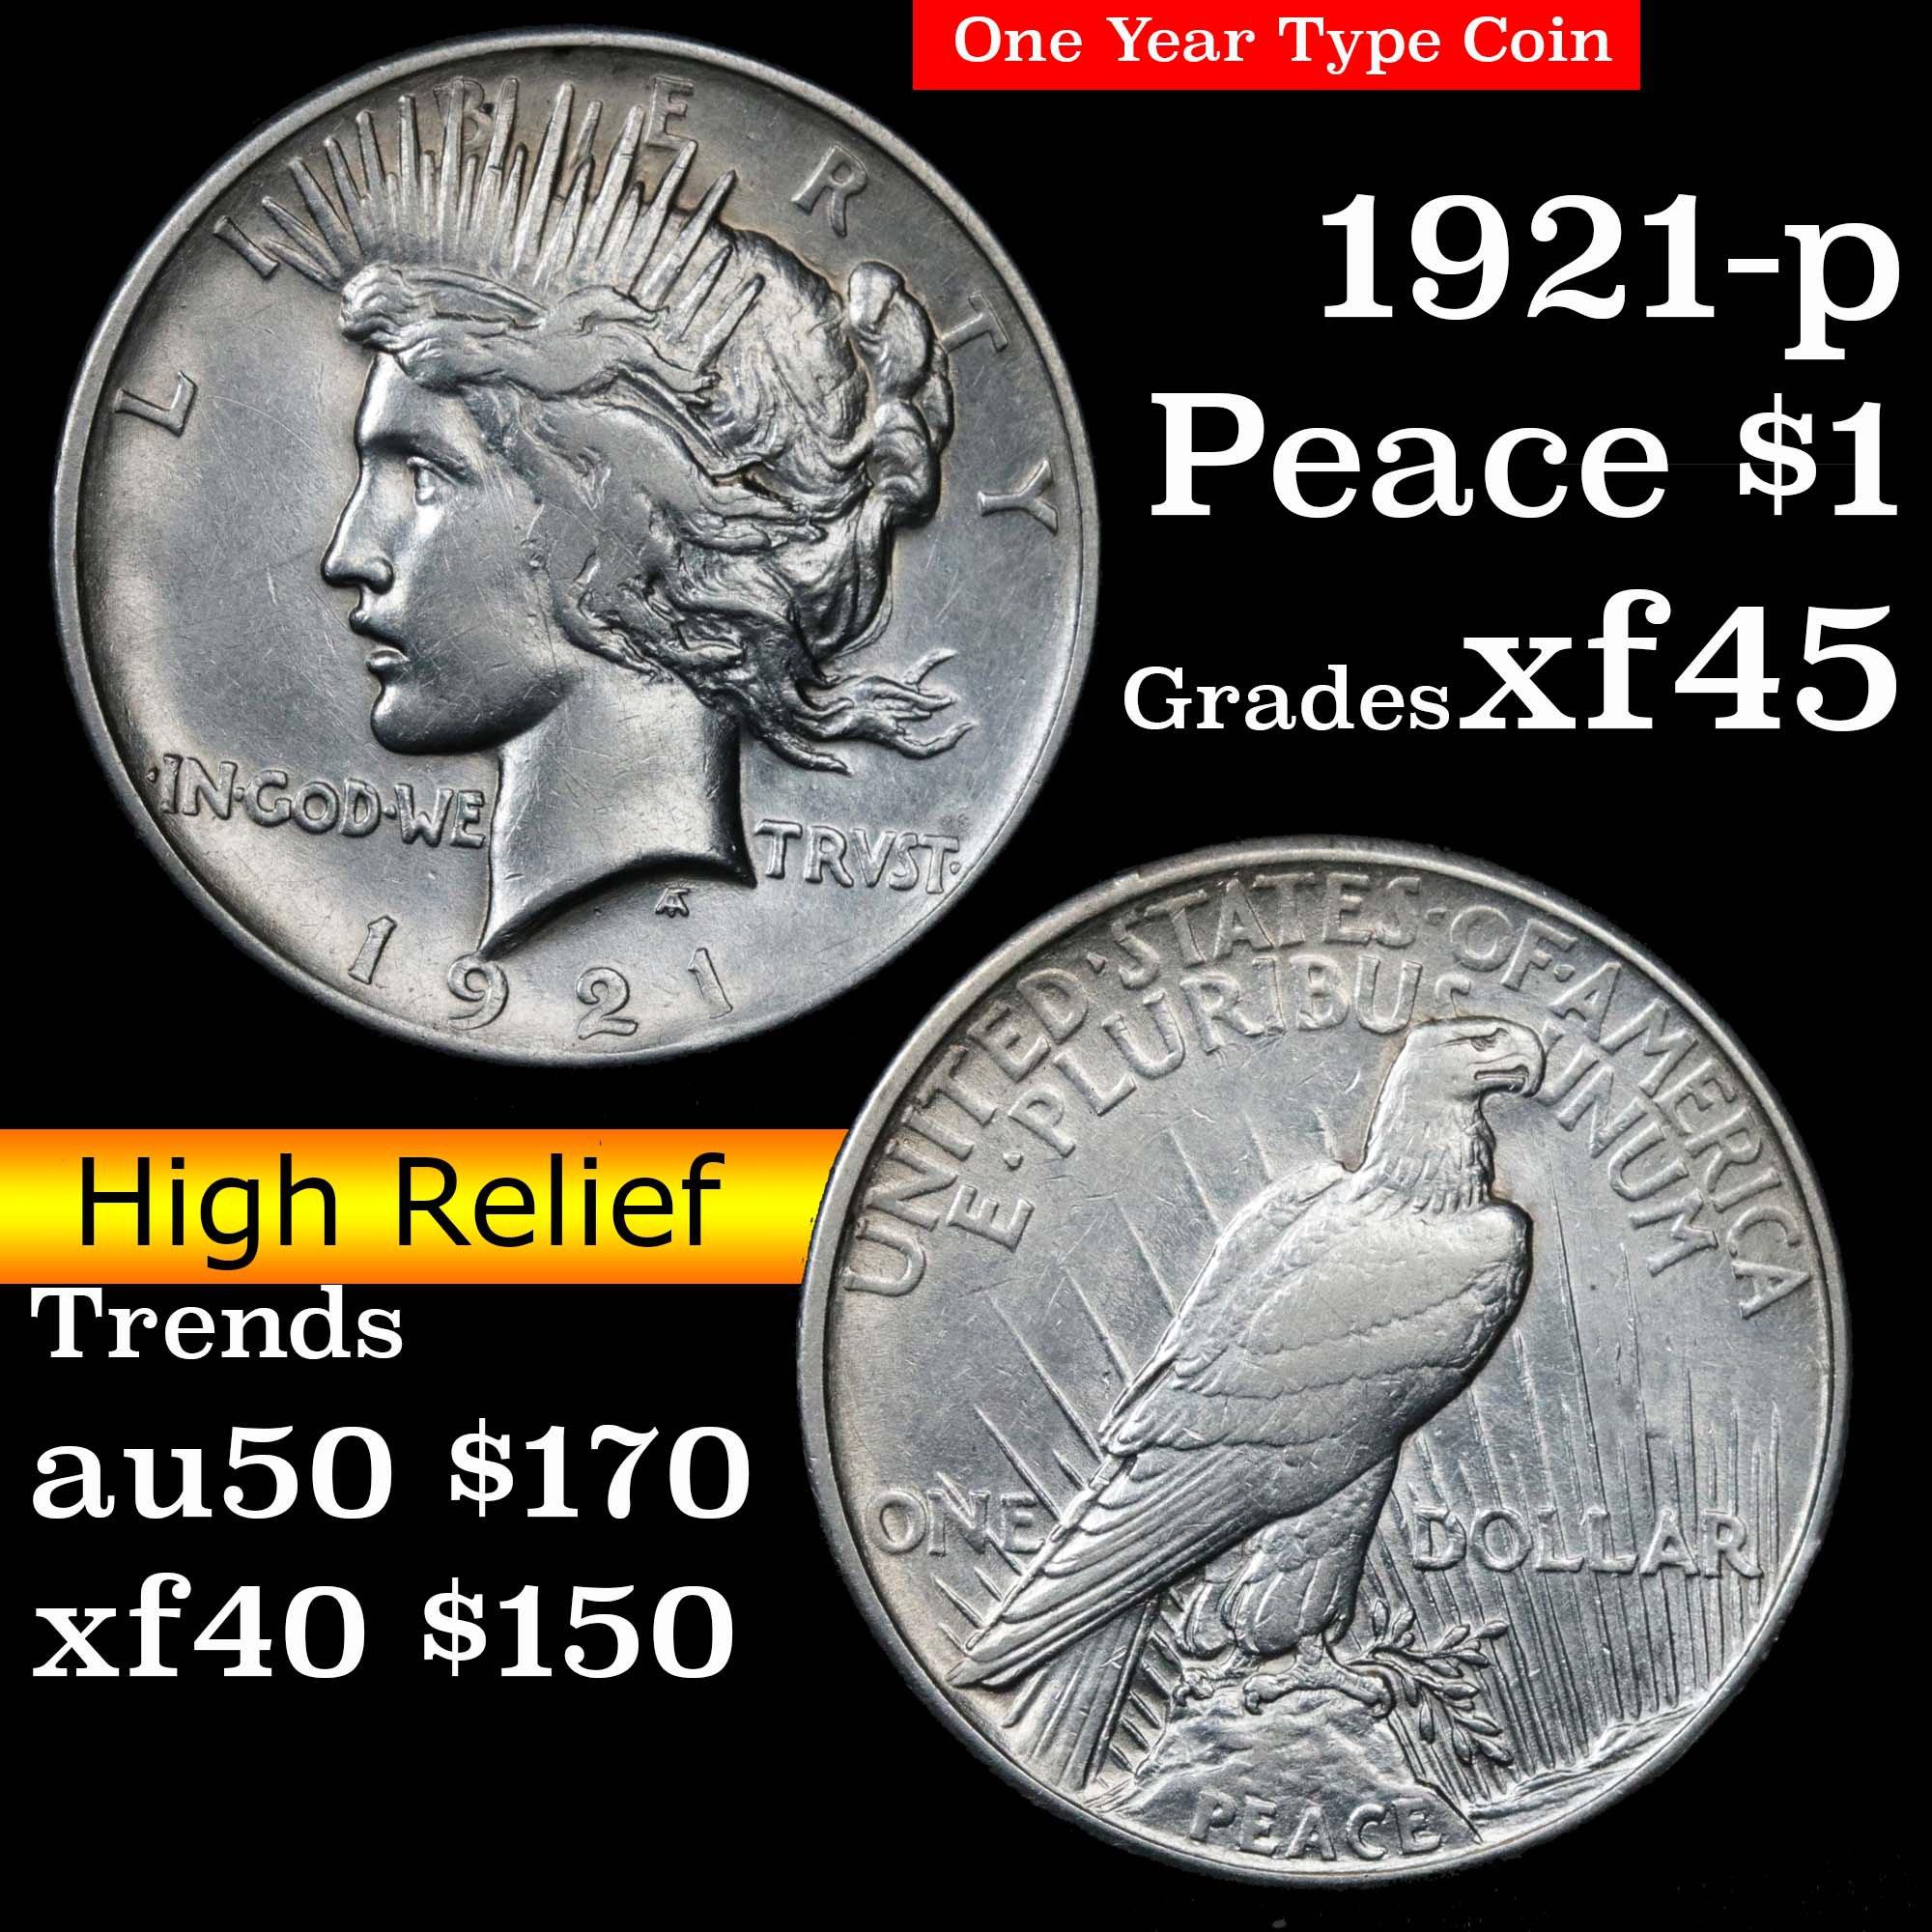 1921-p Peace Dollar $1 Grades xf+